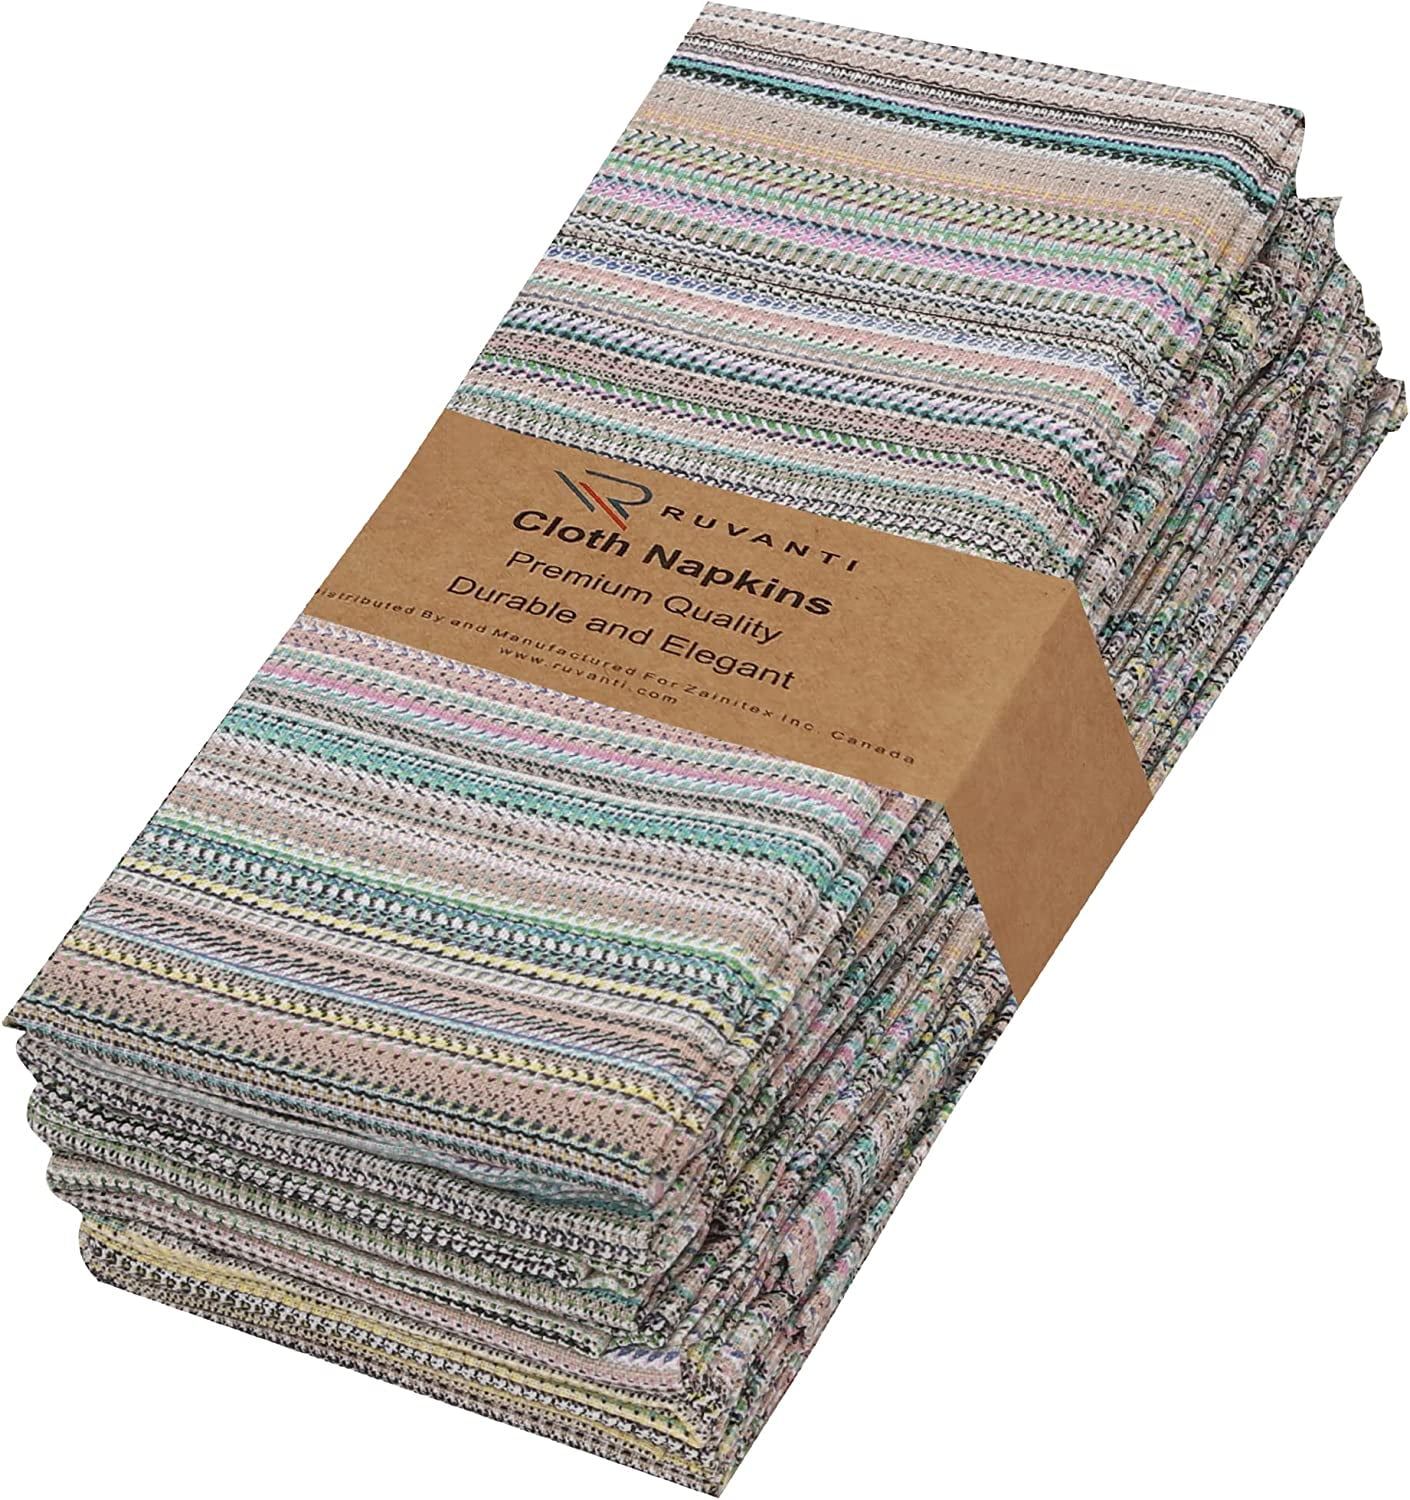 Ruvanti 100% Cotton Multi-Stripe Square Kitchen Cloth Napkins